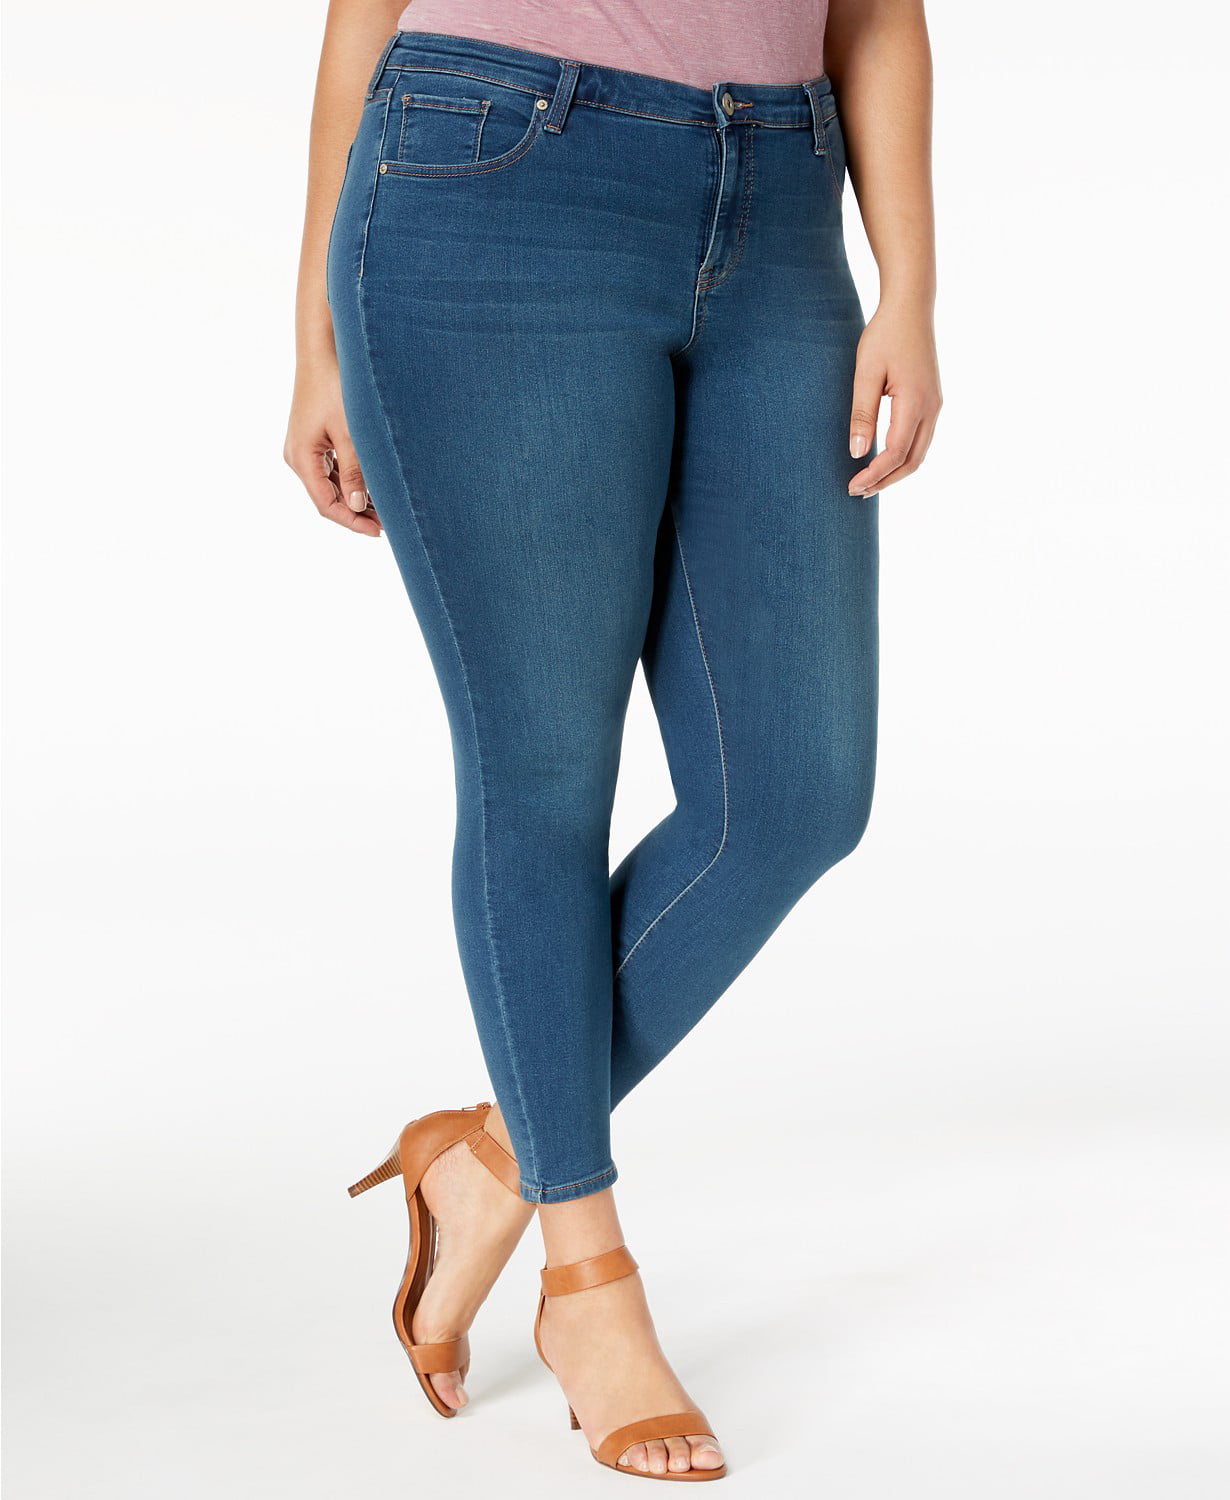 Style & Co. - Ultra-Skinny Ankle Jeans - Plus Size - 14W - Walmart.com ...